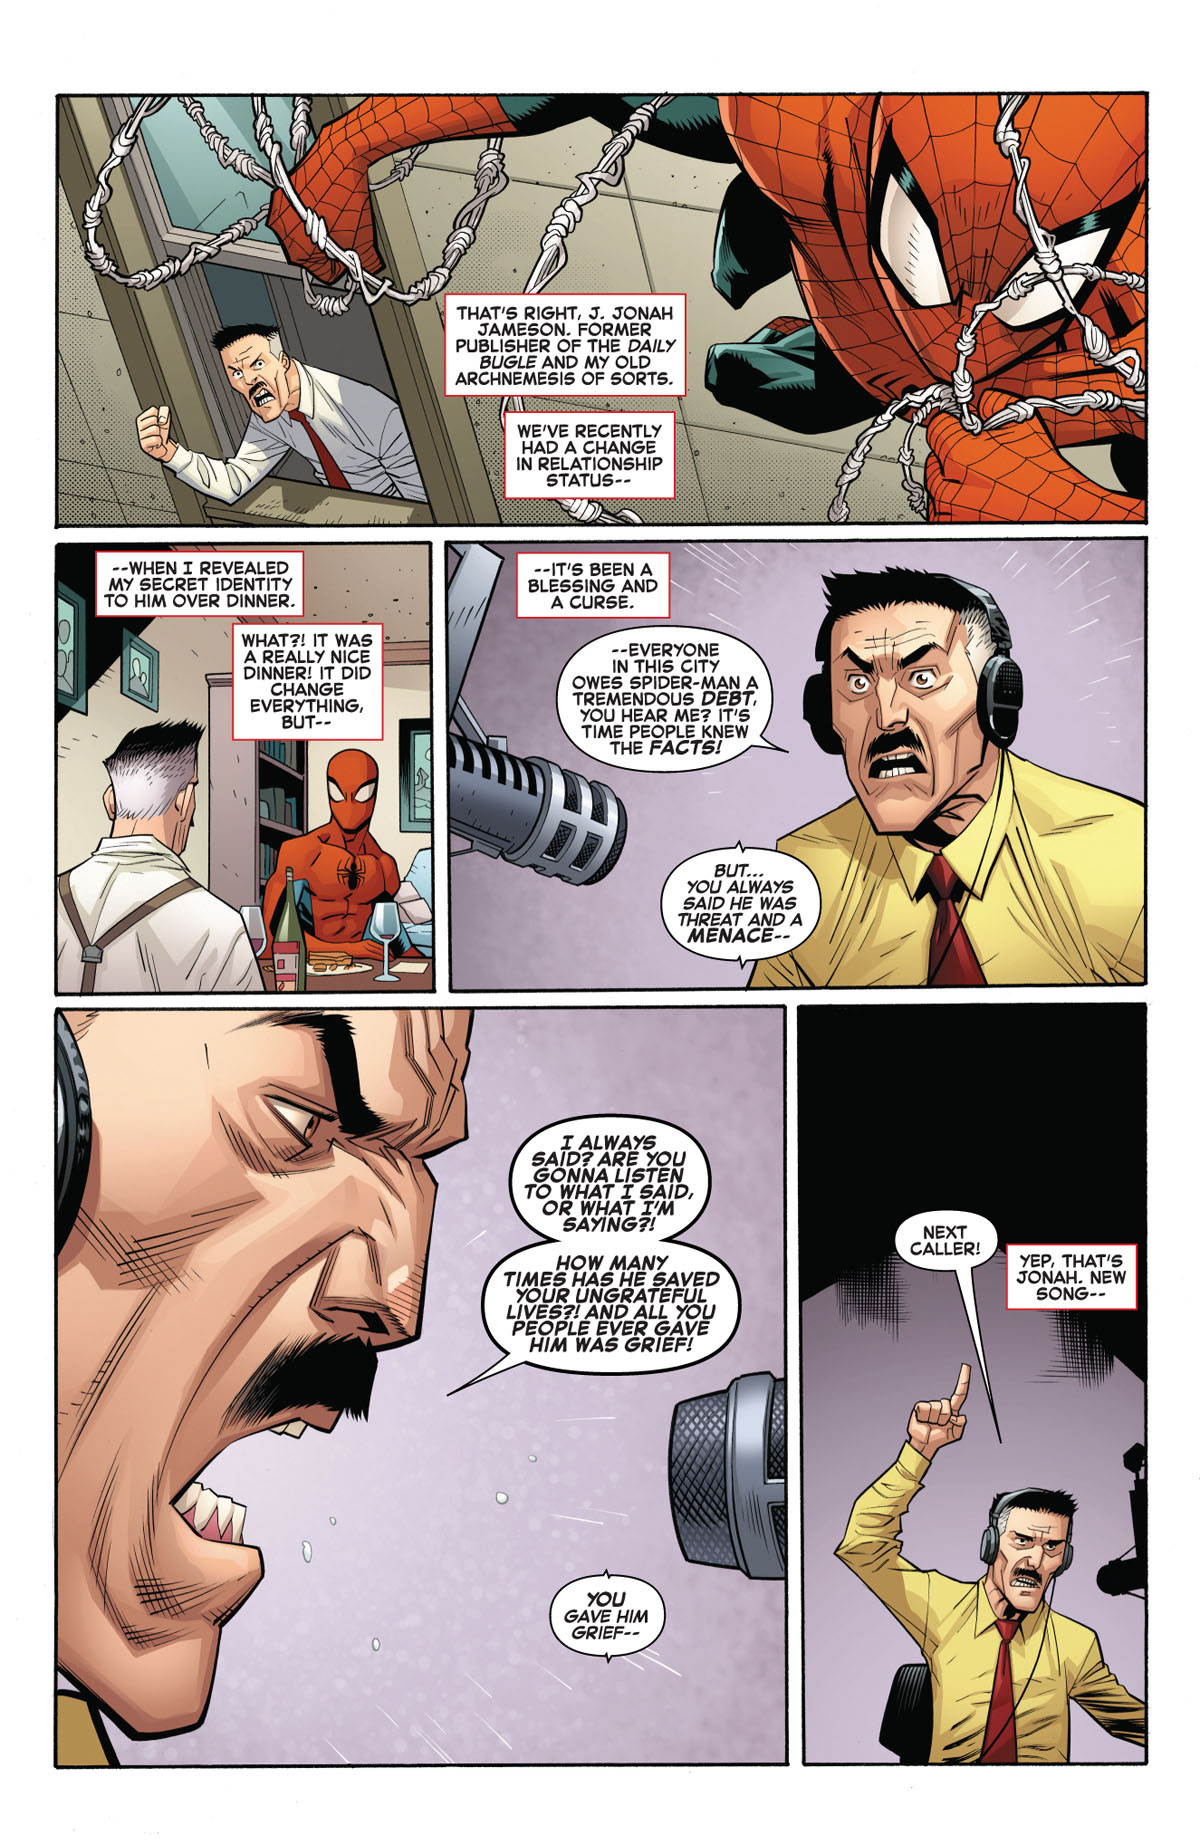 Amazing Spider-Man #11 page 3